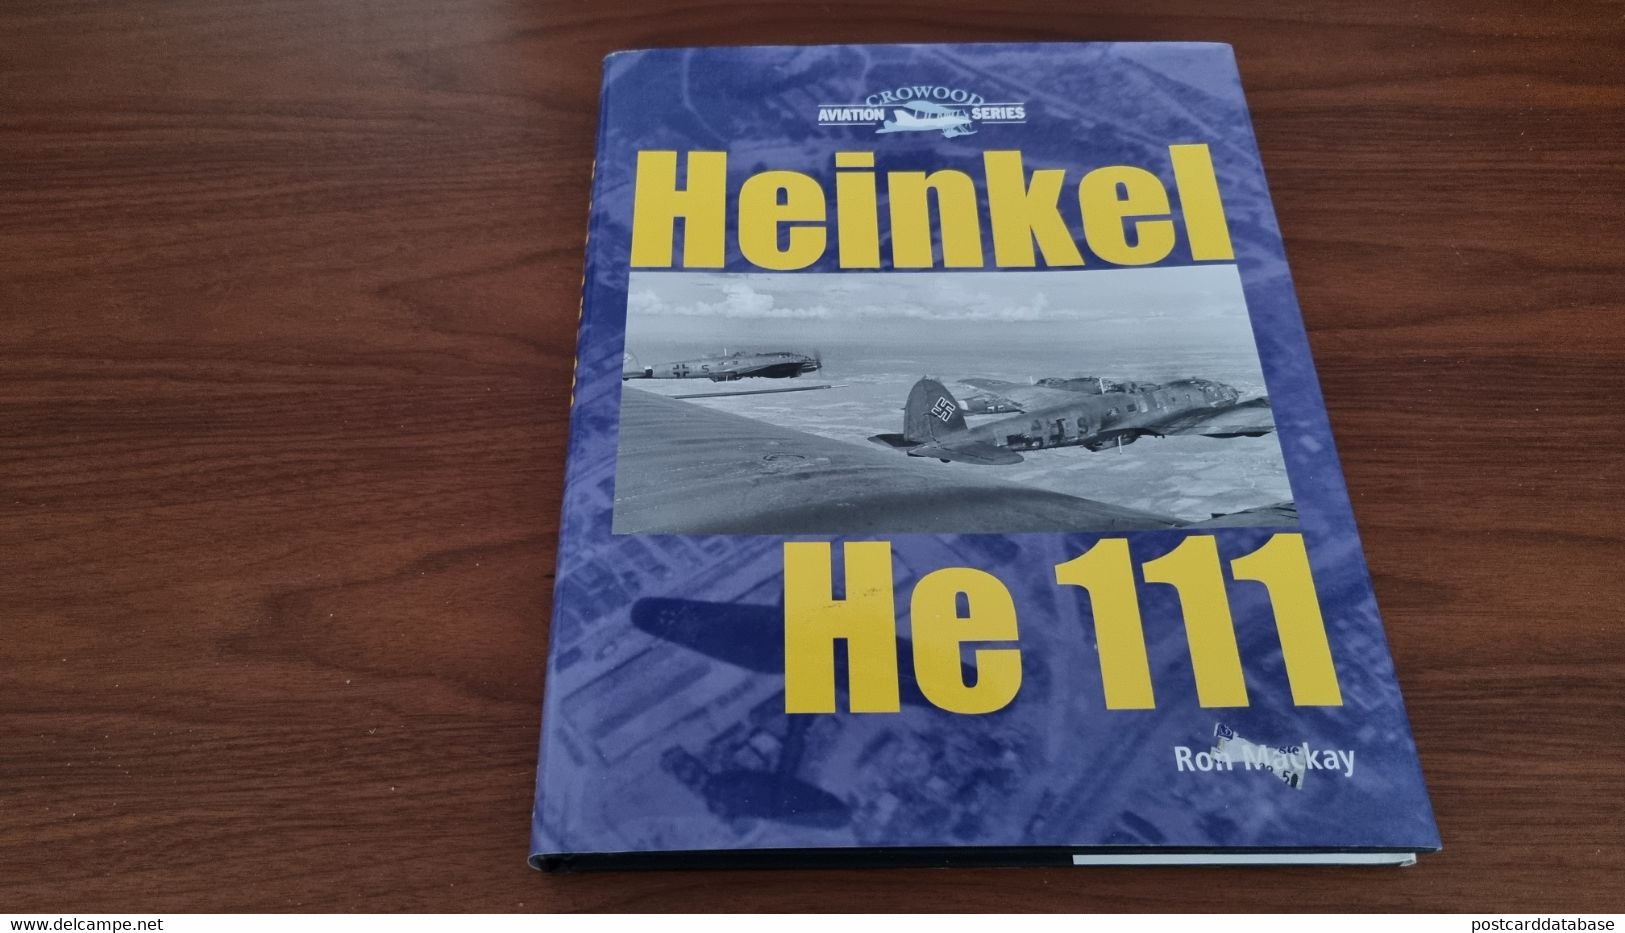 Heinkel He 111 - Aviation Series - Ron Mackay - Weltkrieg 1939-45